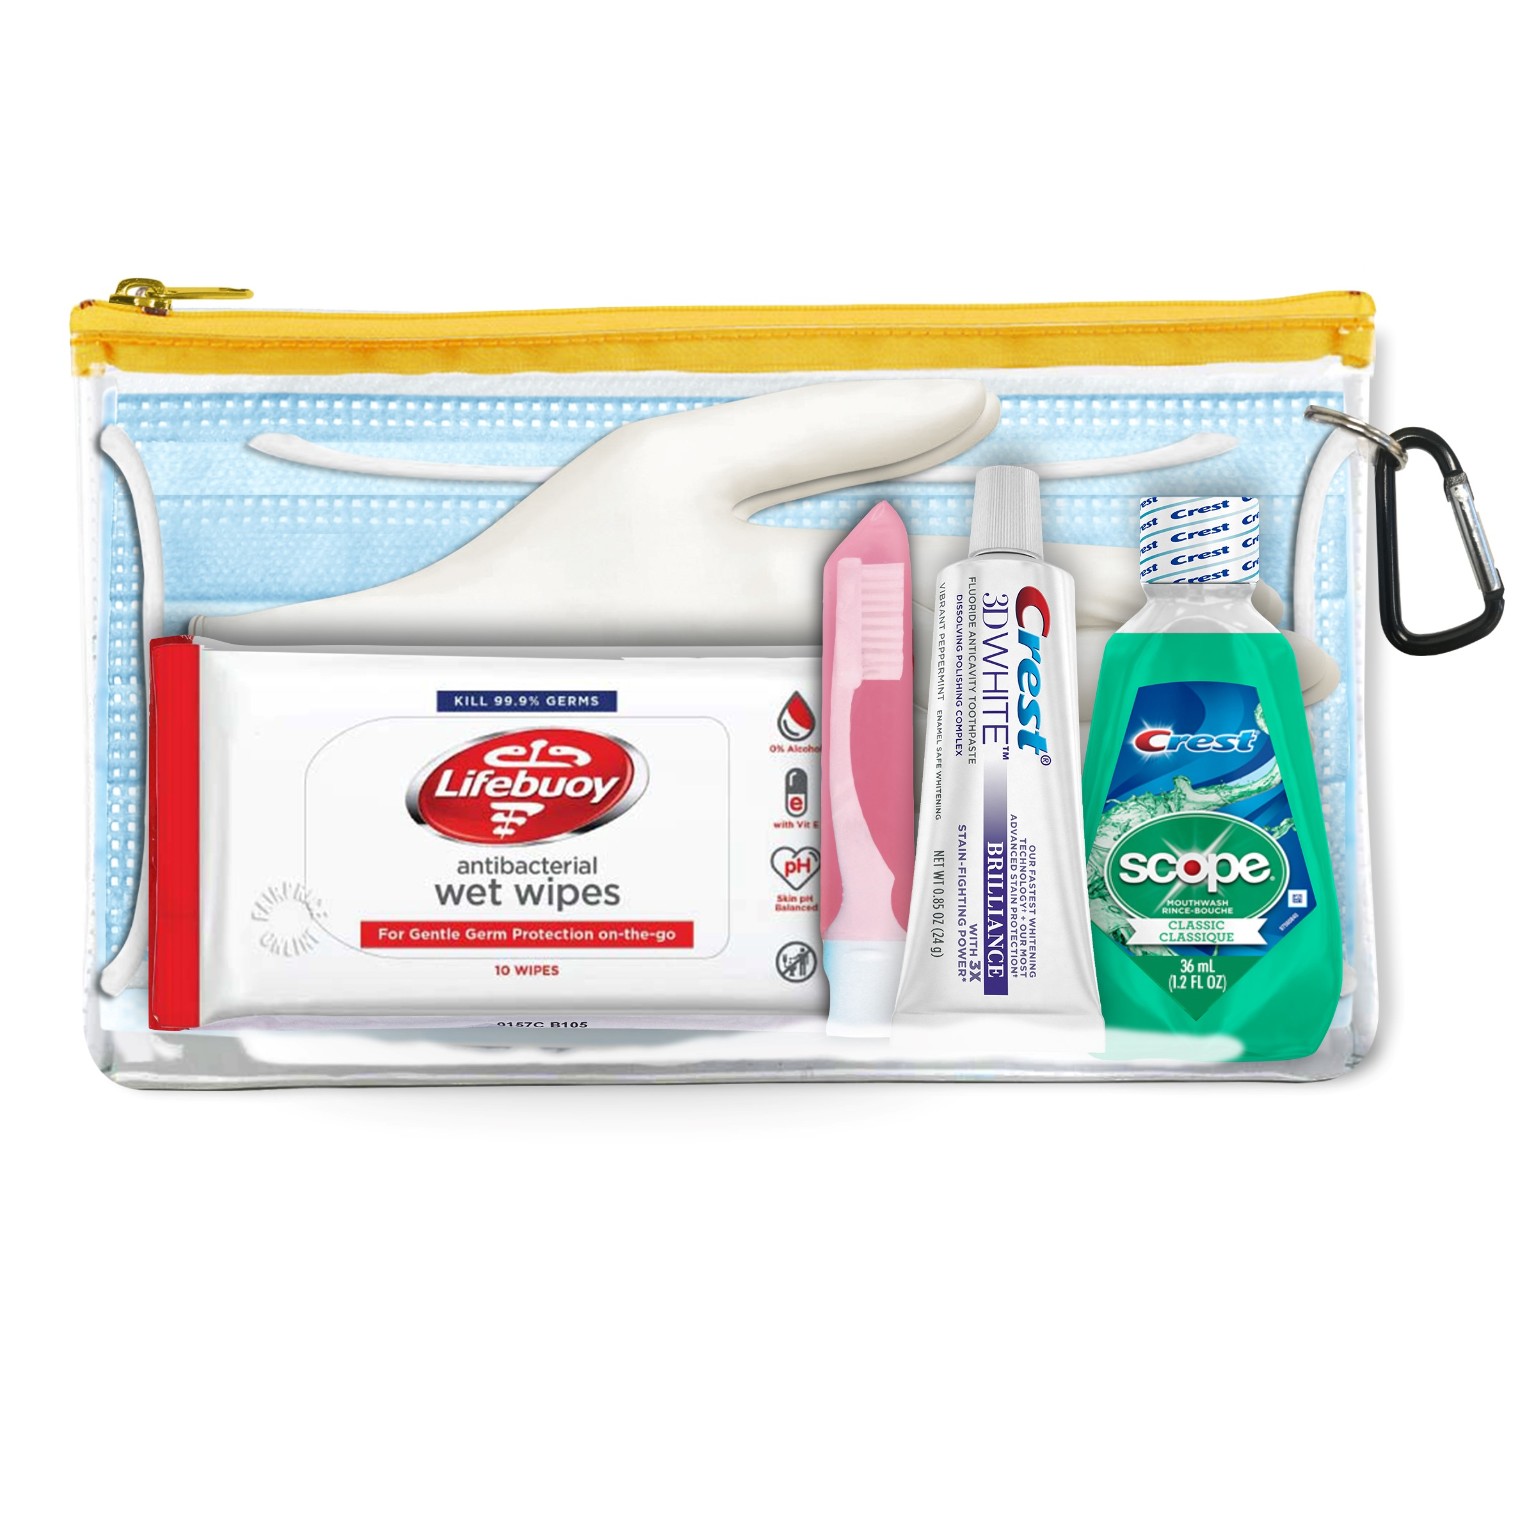 Men's Deluxe Hygiene Kit - 11 Pieces, Travel Size